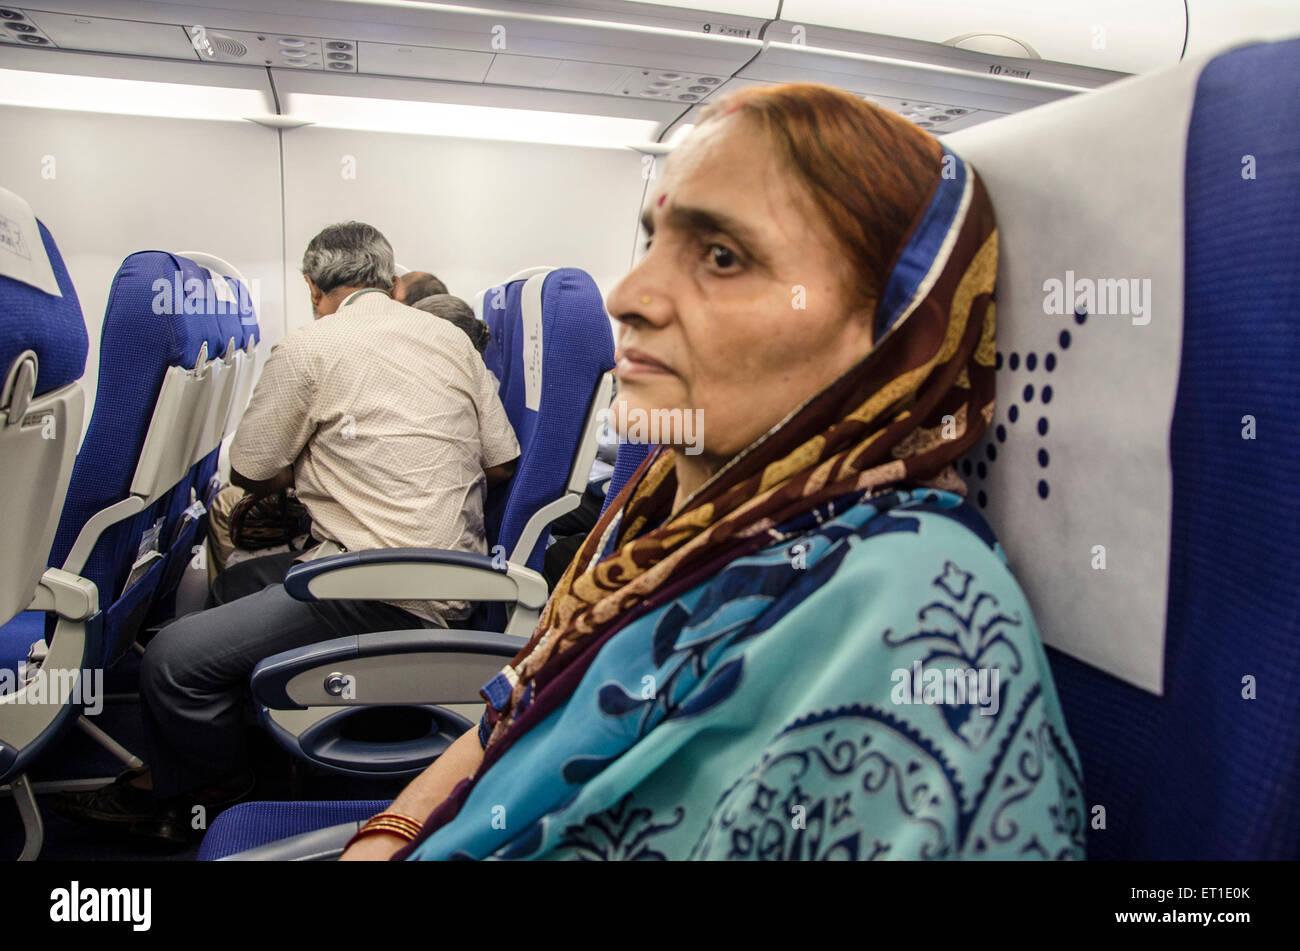 Passengers in Airplane Kolkata West Bengal India Asia MR#'704 Stock Photo